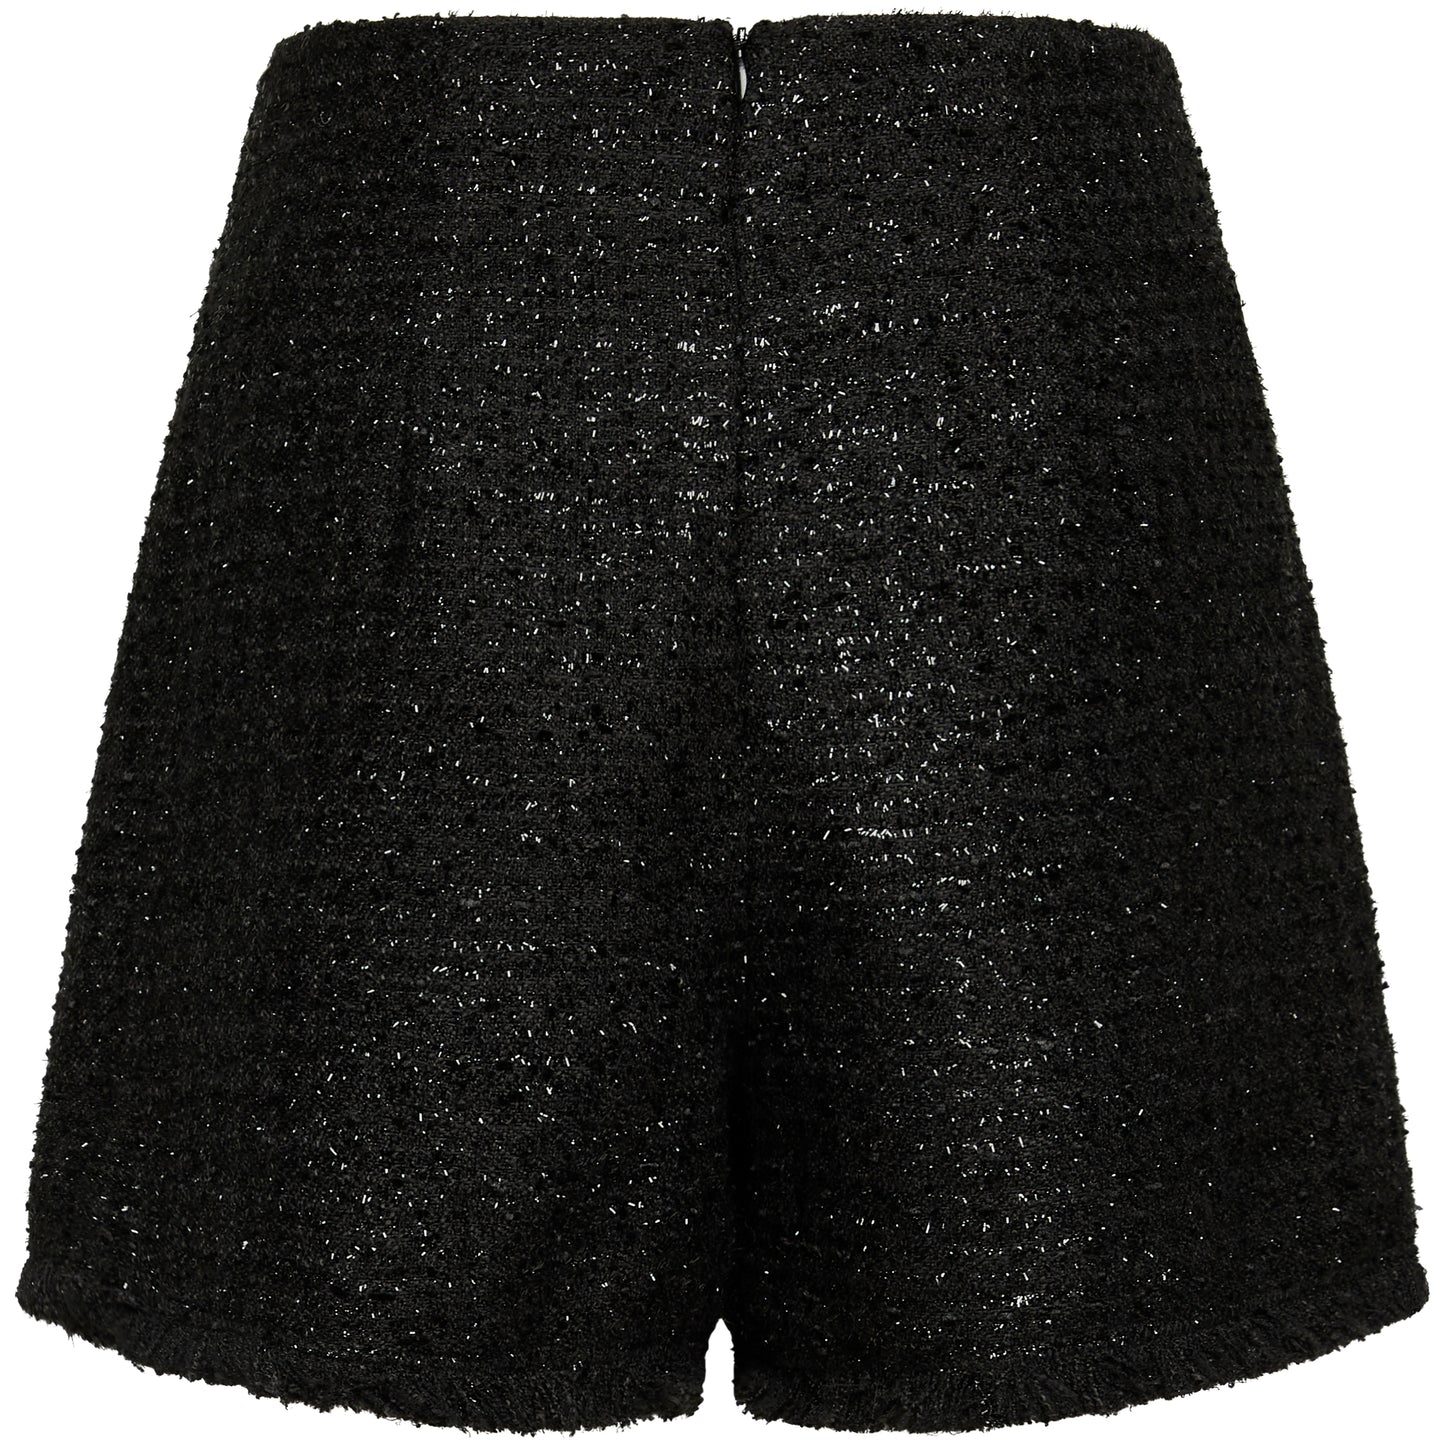 Bruuns Bazaar Women - Raspberry Nadini shorts - Black